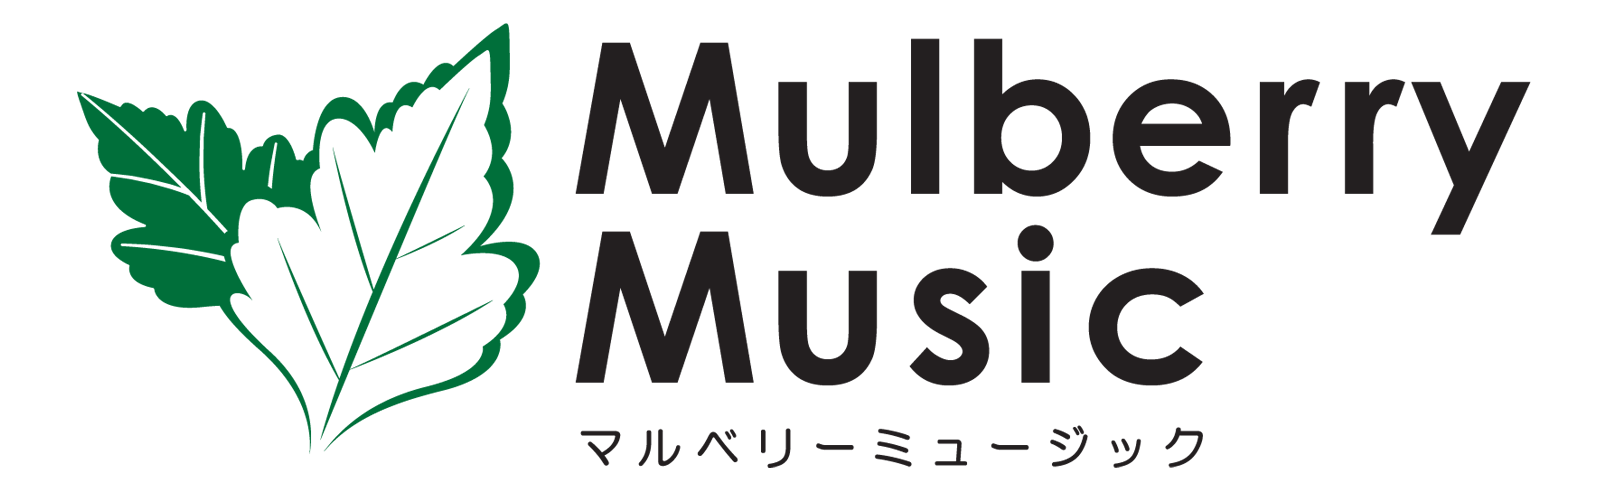 Mulberry Music